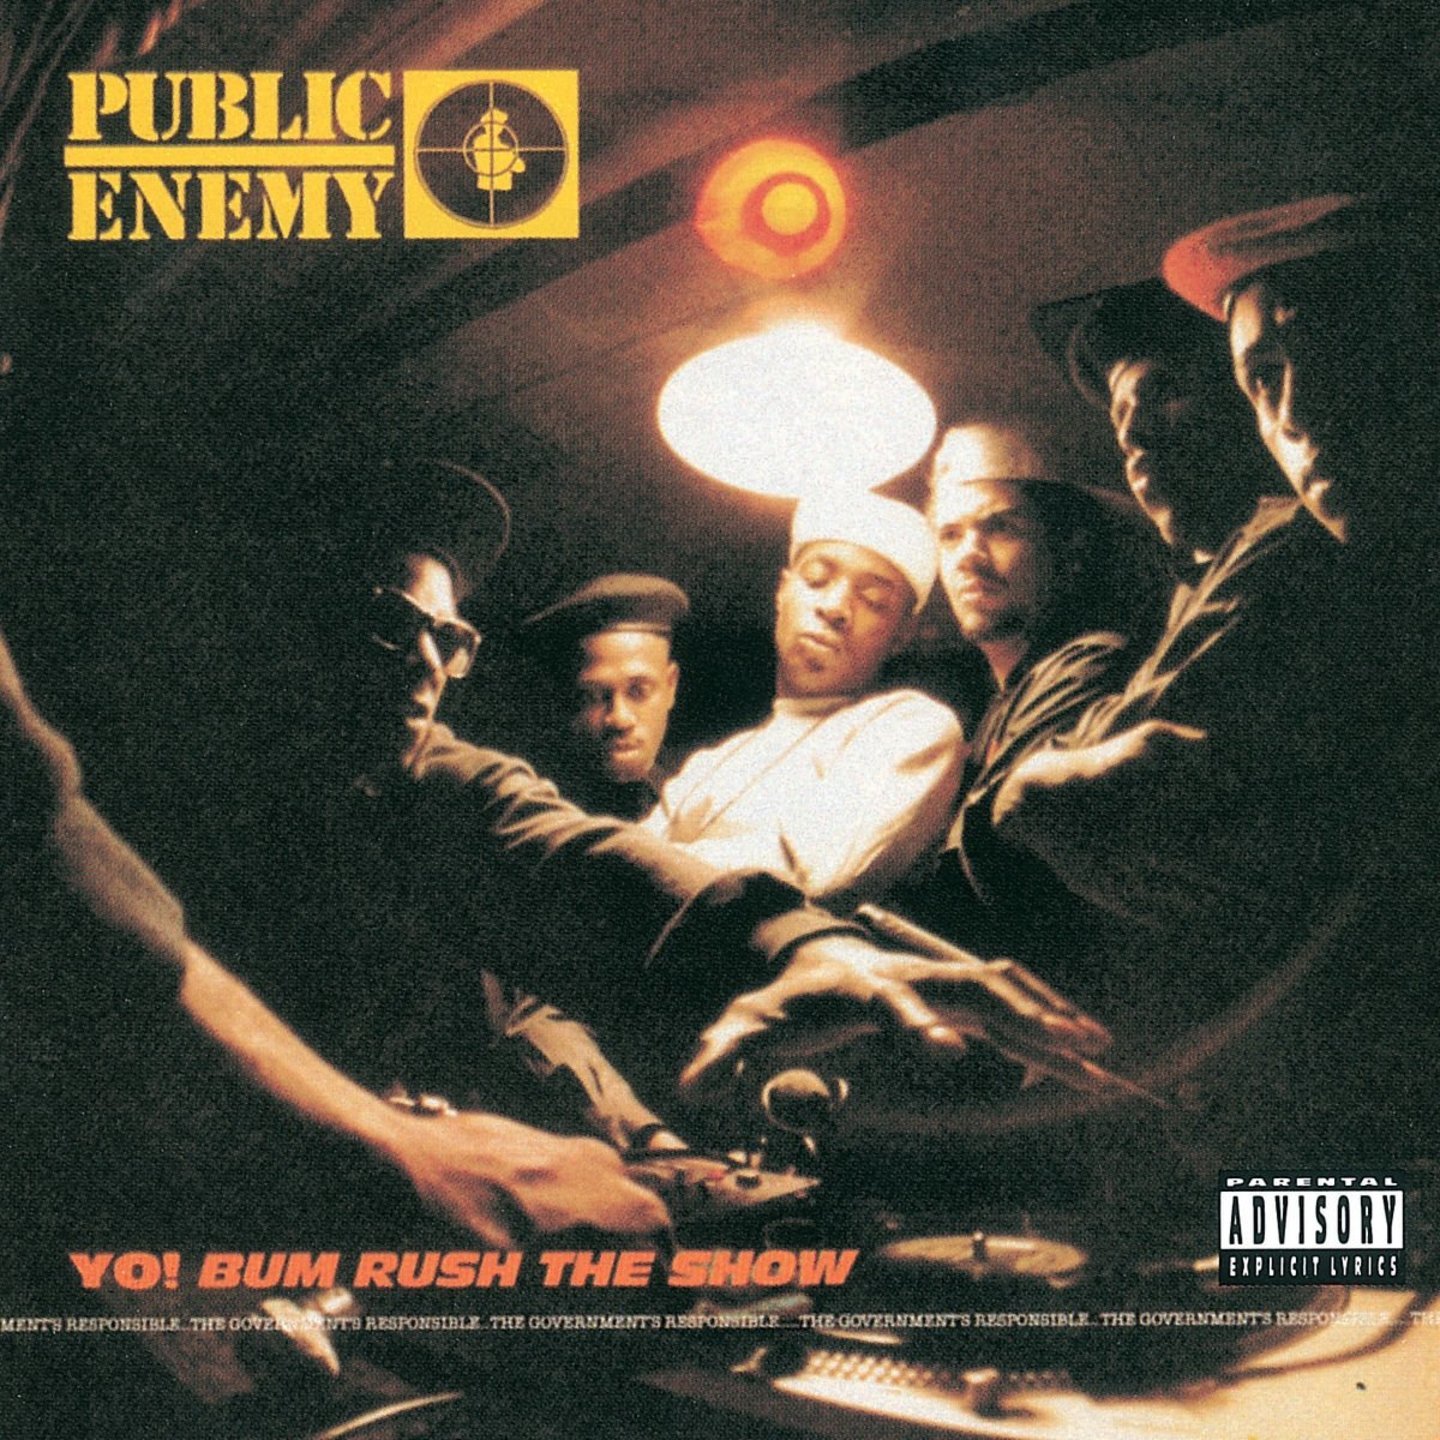 PUBLIC ENEMY - Yo Bum Rush The Show LP